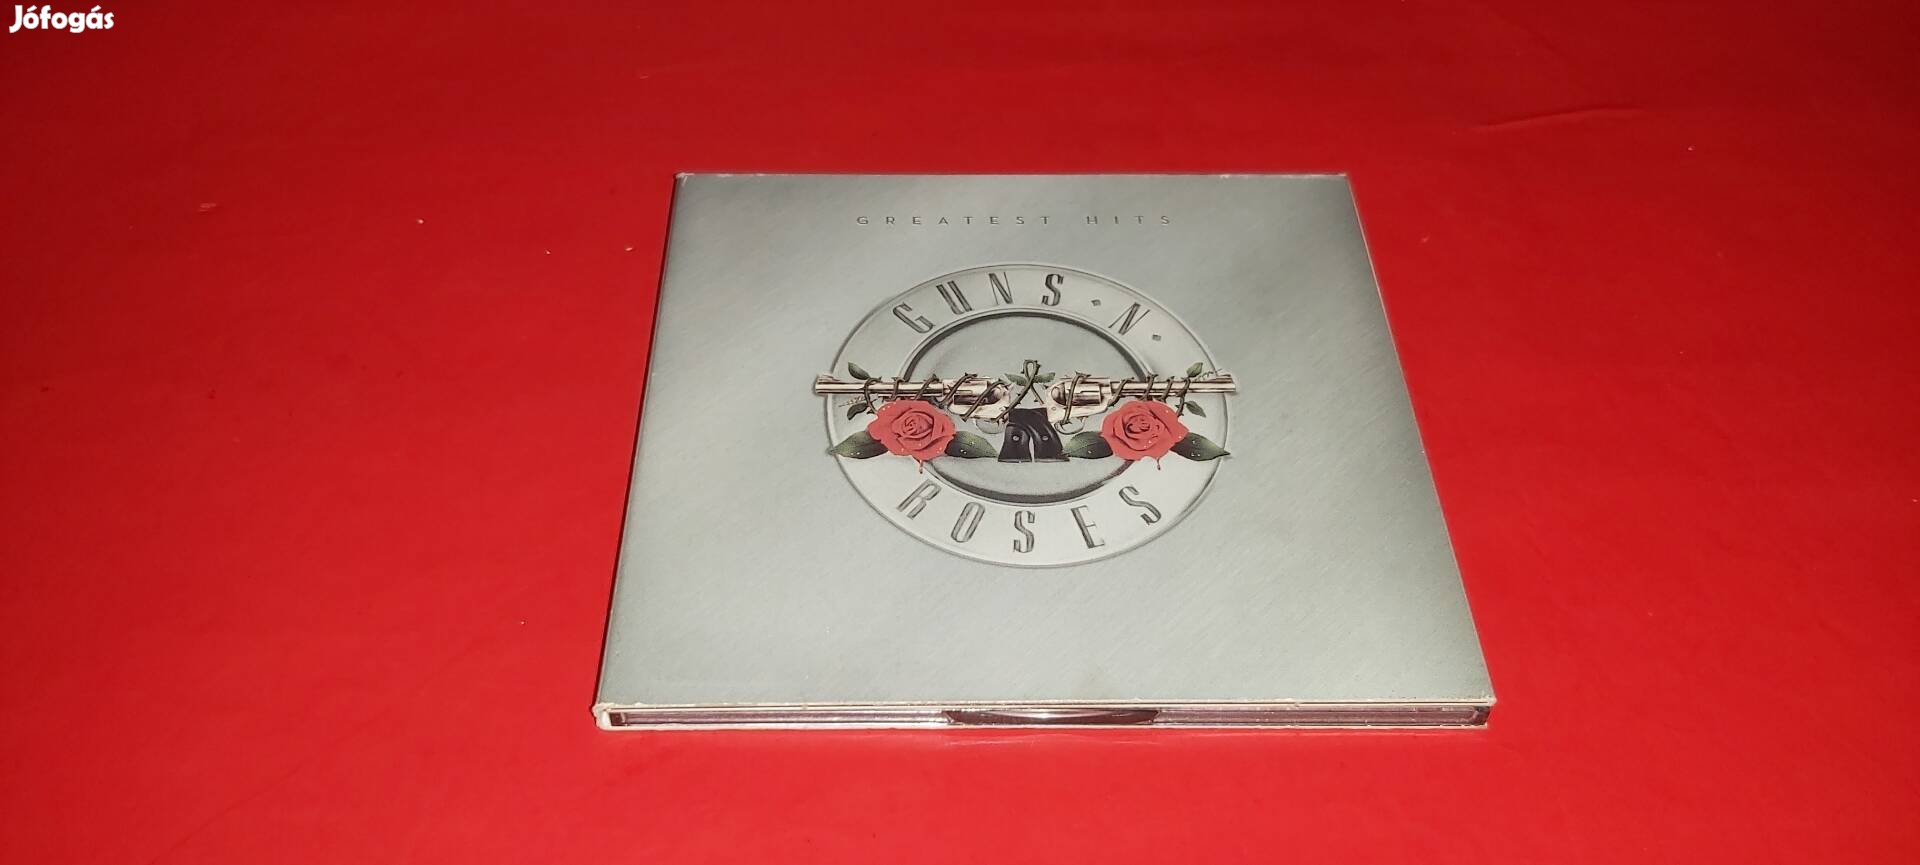 Guns 'N' Roses Greatest hits Cd 2004